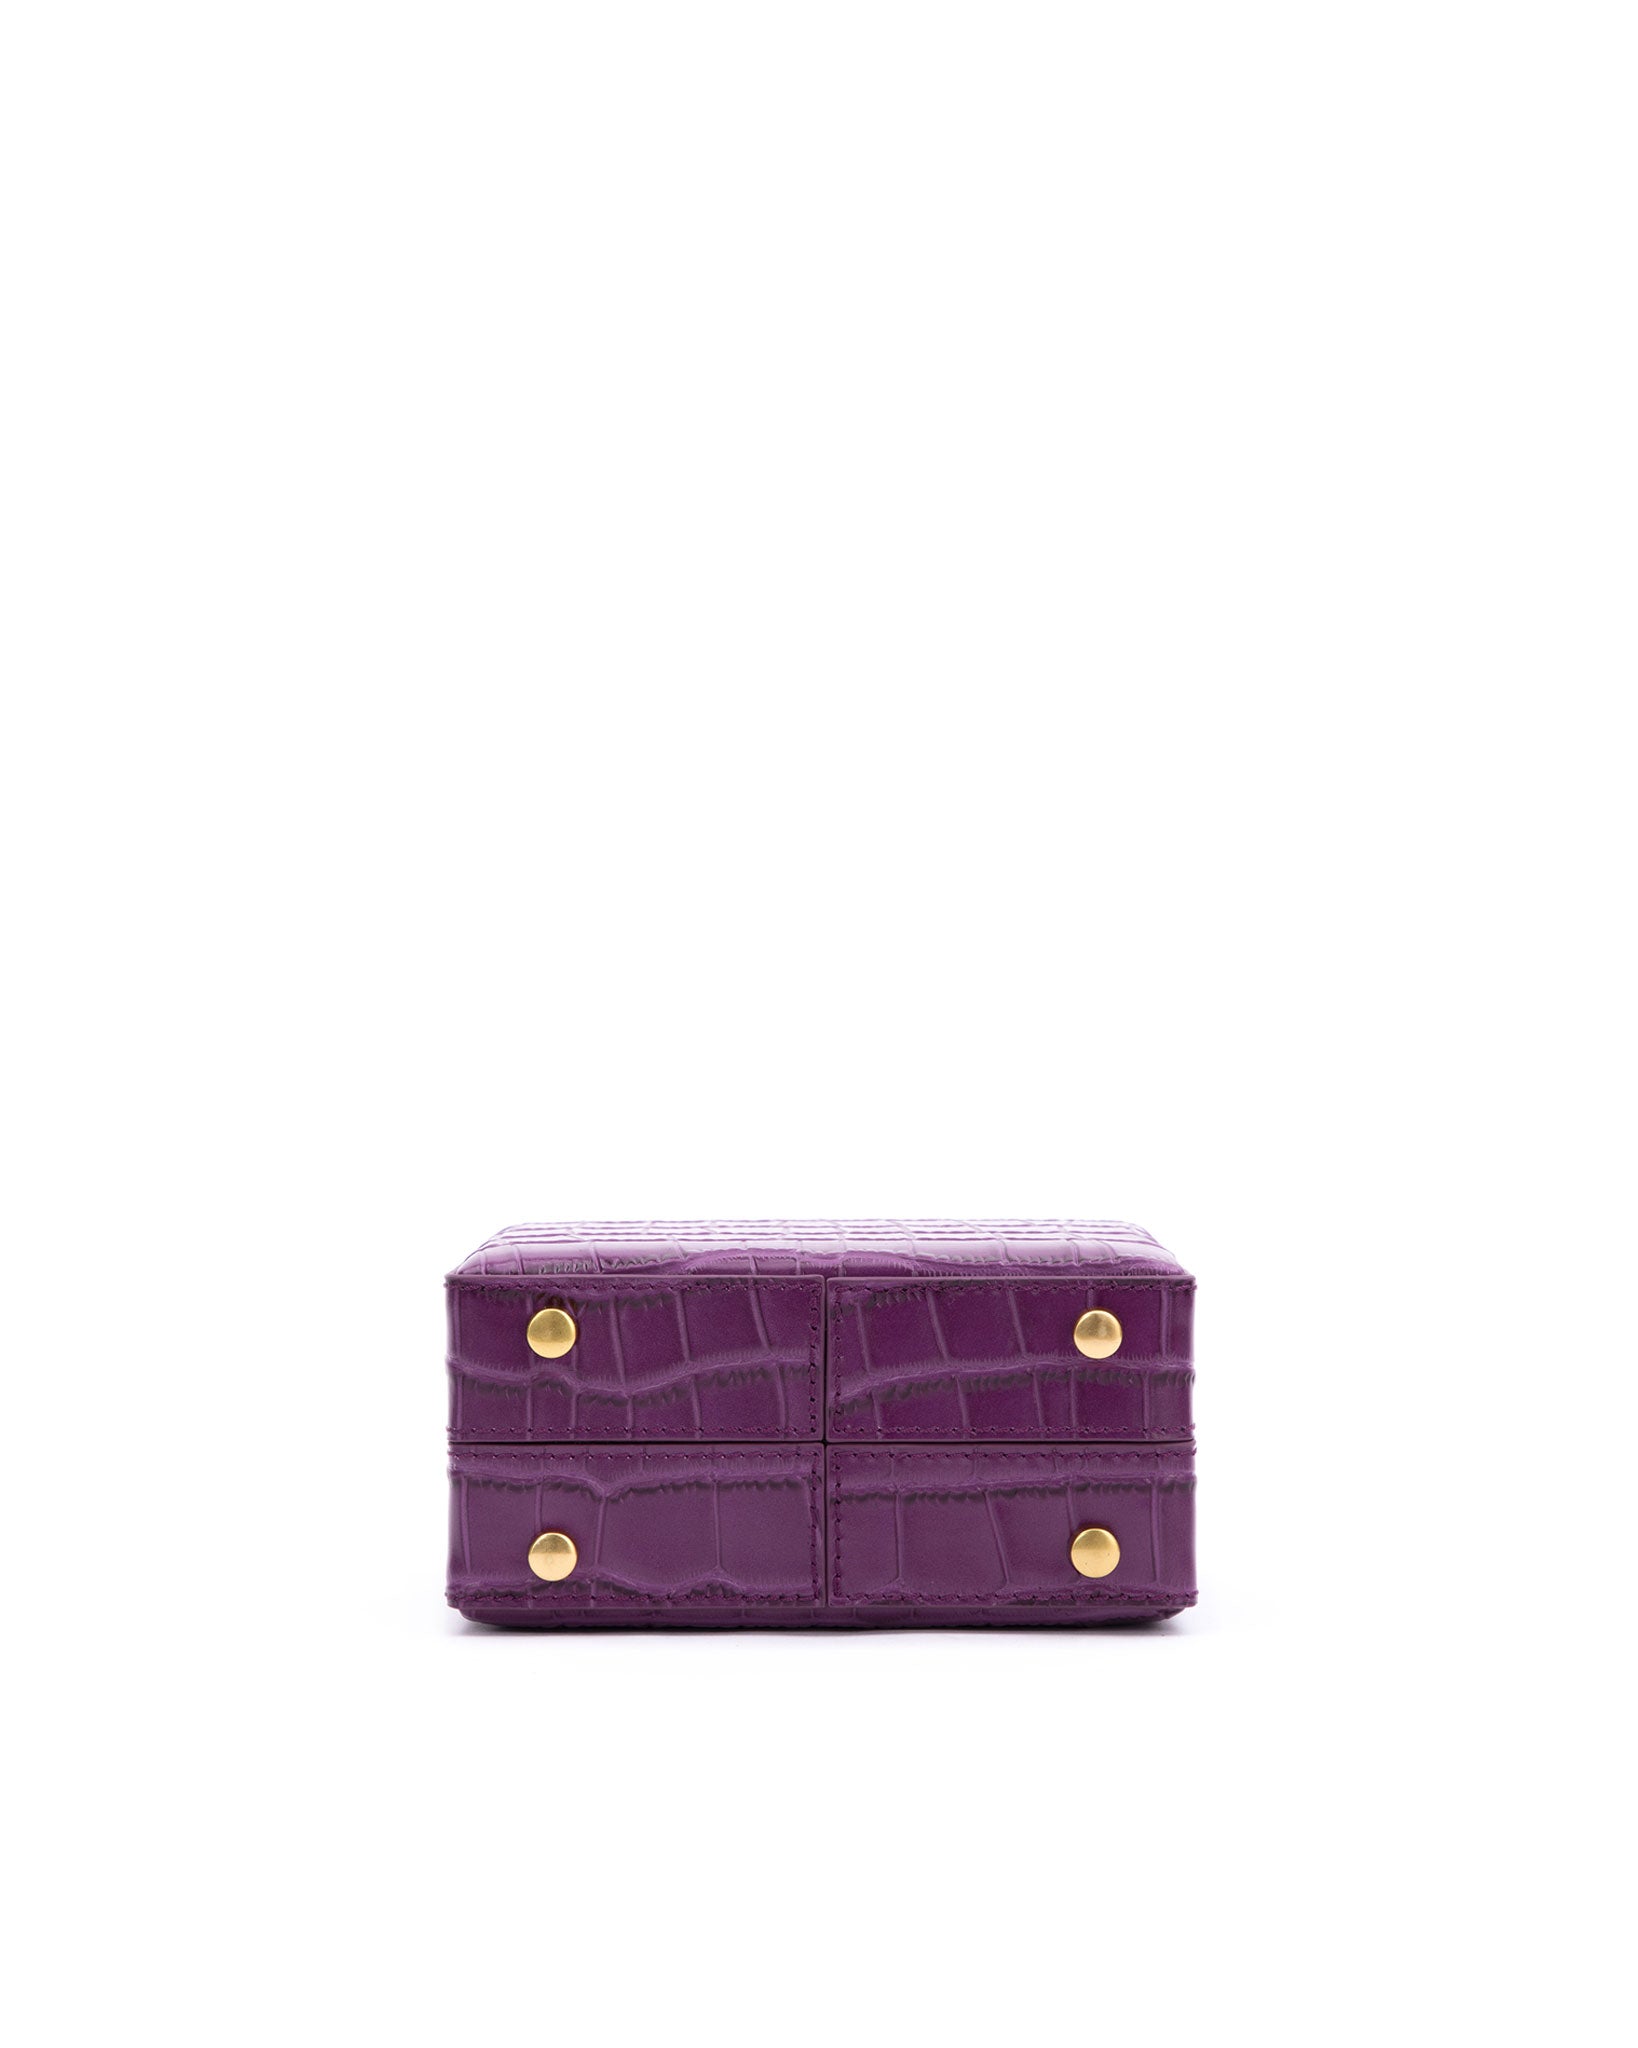 Brandon Blackwood New York - Mini Kendrick Trunk - Purple Croc Embossed Leather w/ Brass Hardware